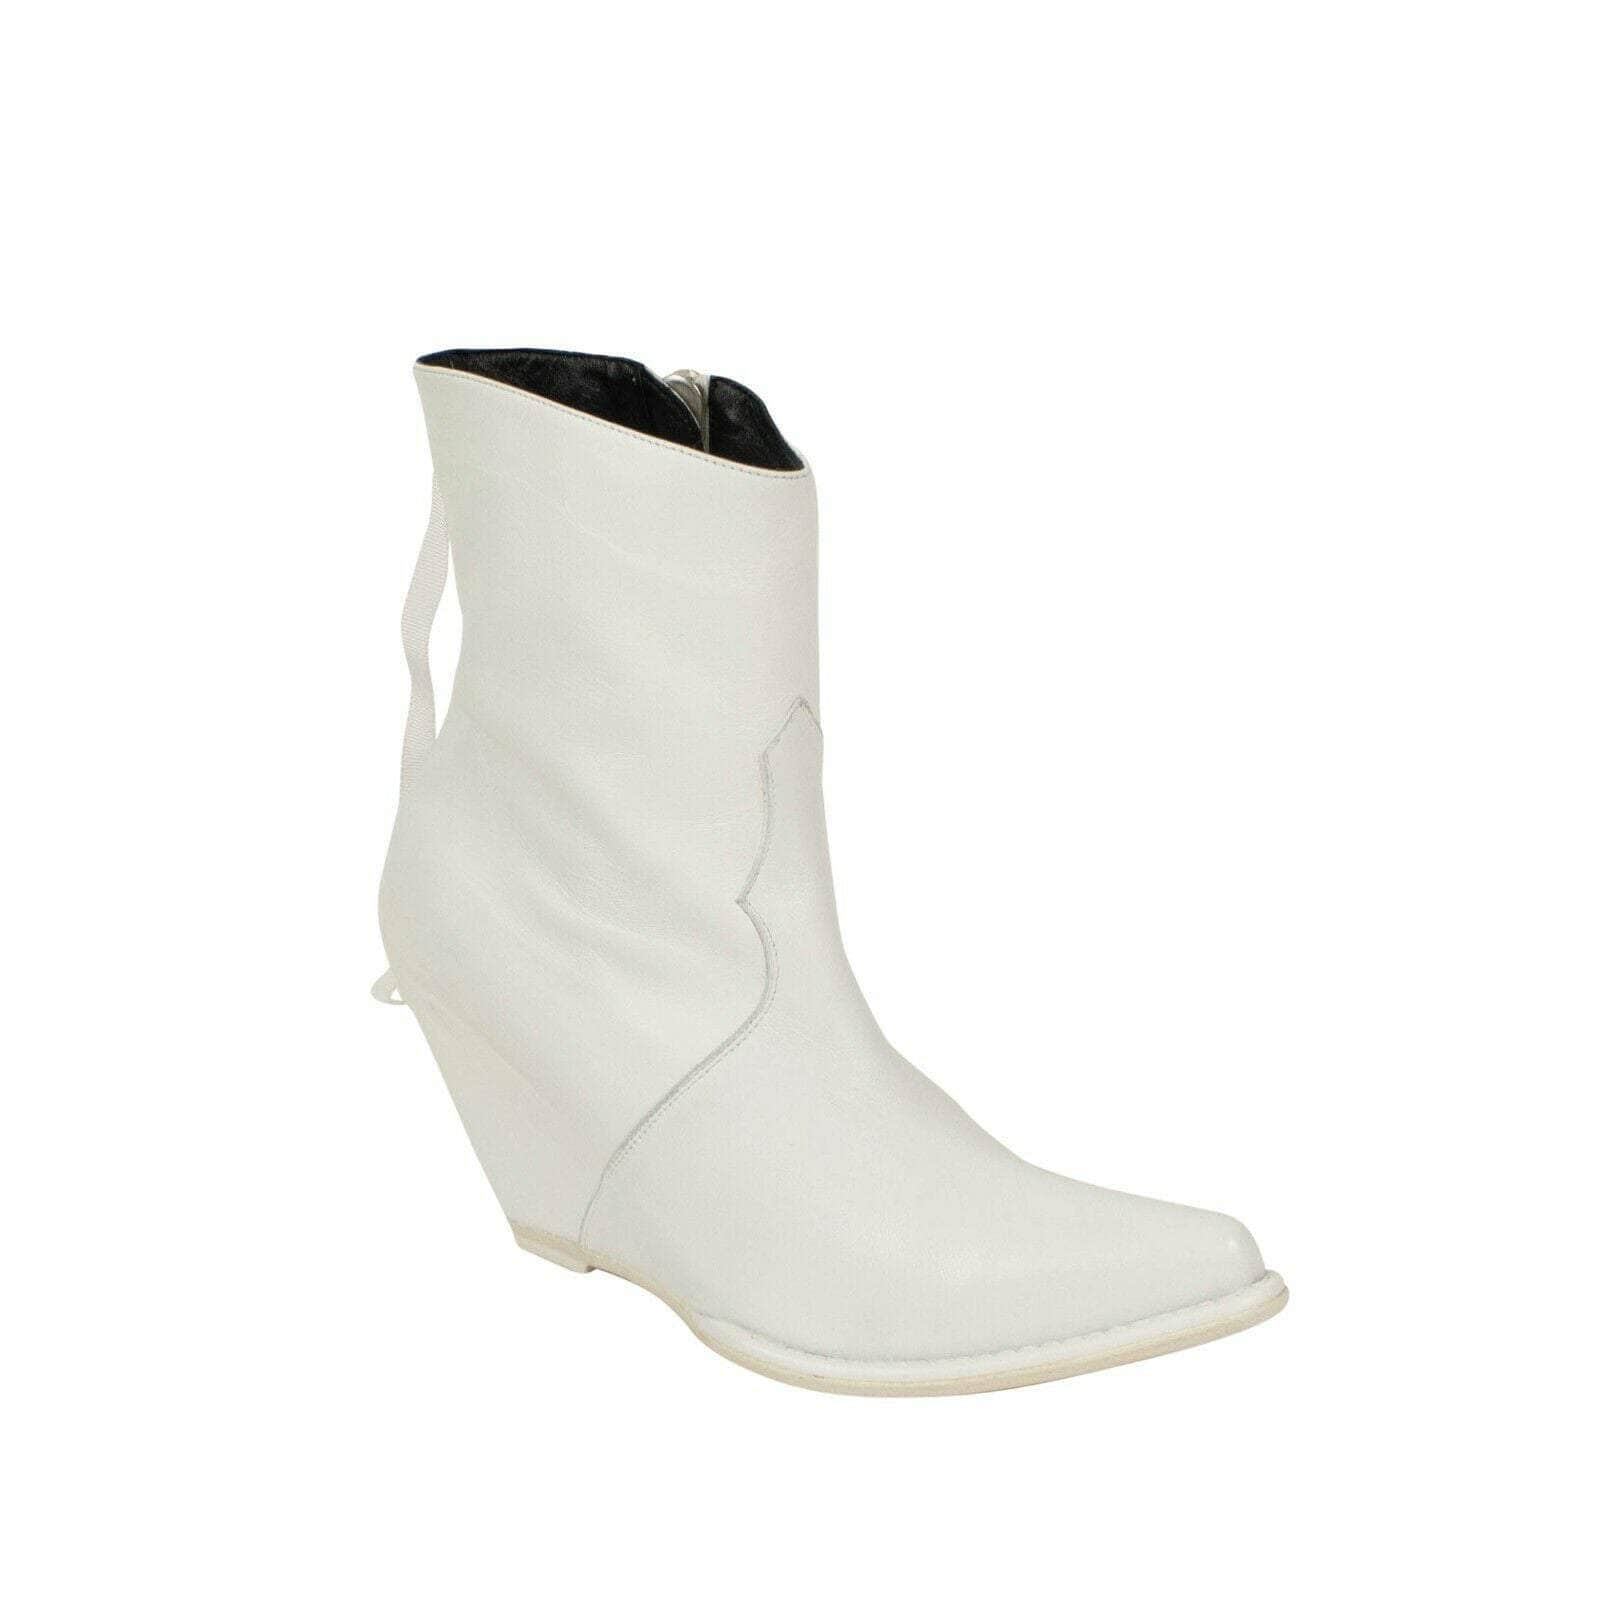 Unravel Project Women's Boots 37 EU Leather Western Low Boots - White JF6-UN-2002/37 JF6-UN-2002/37